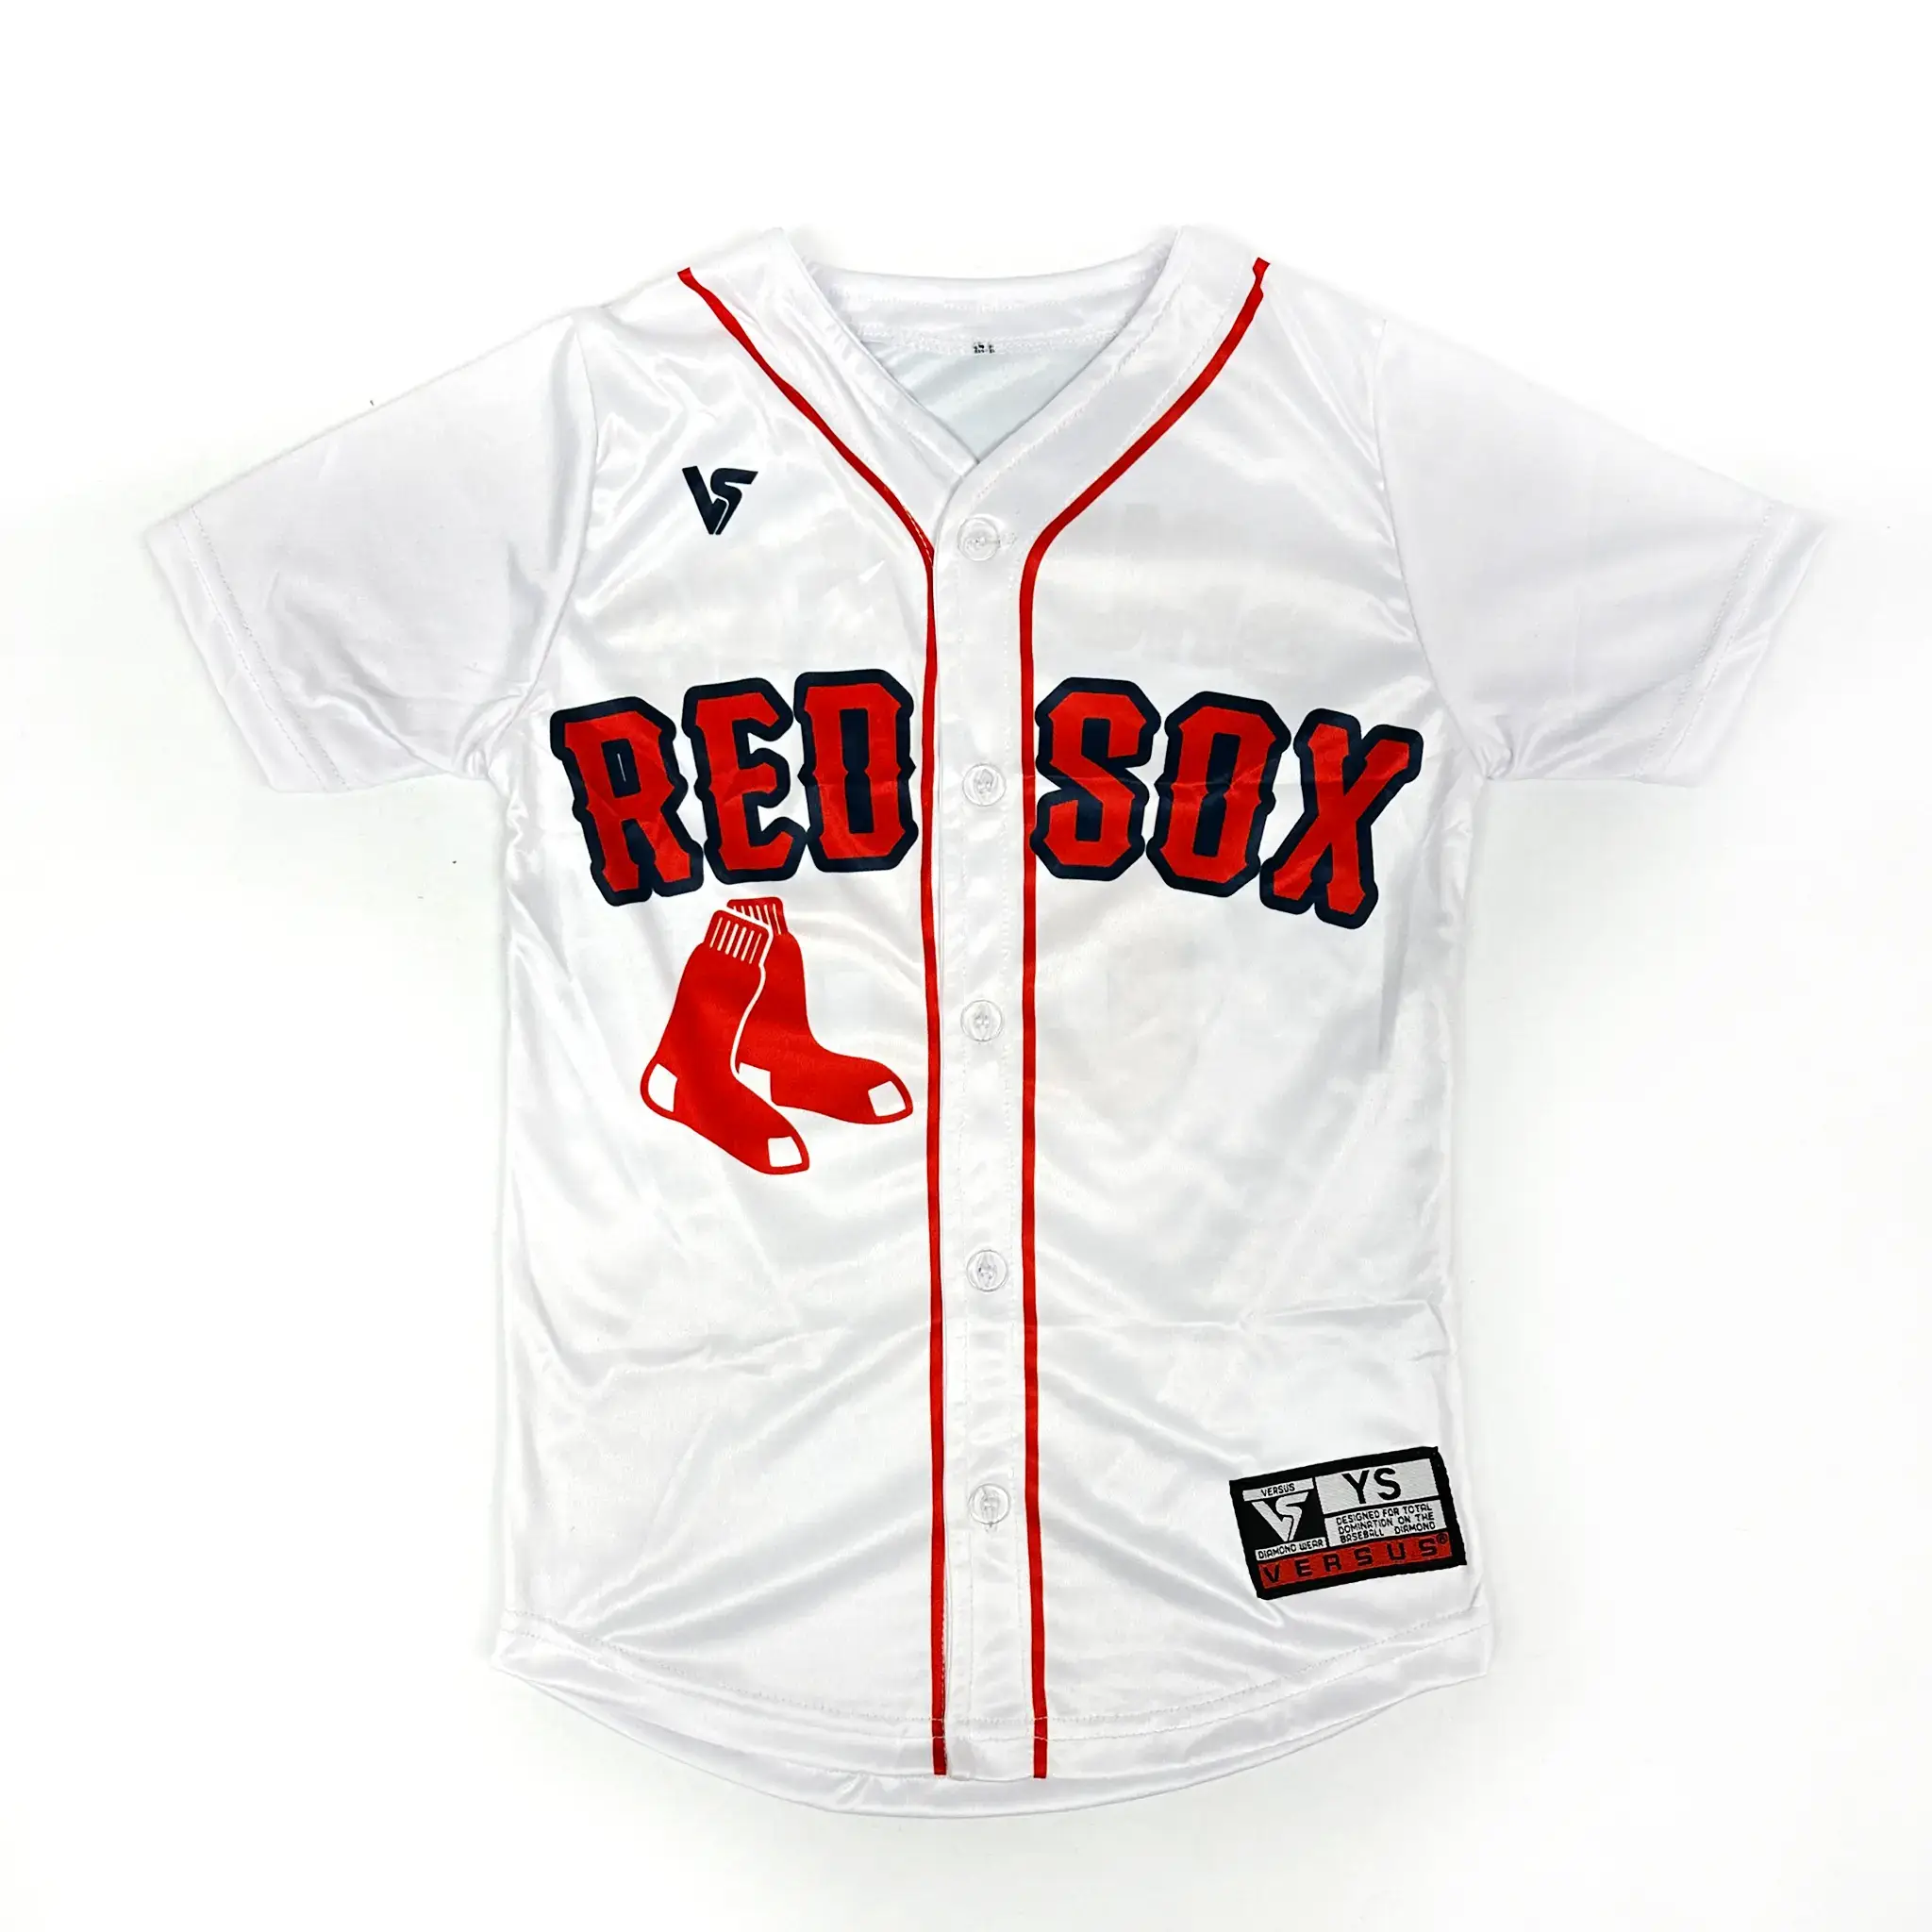 White Red Soz Baseball Jersey